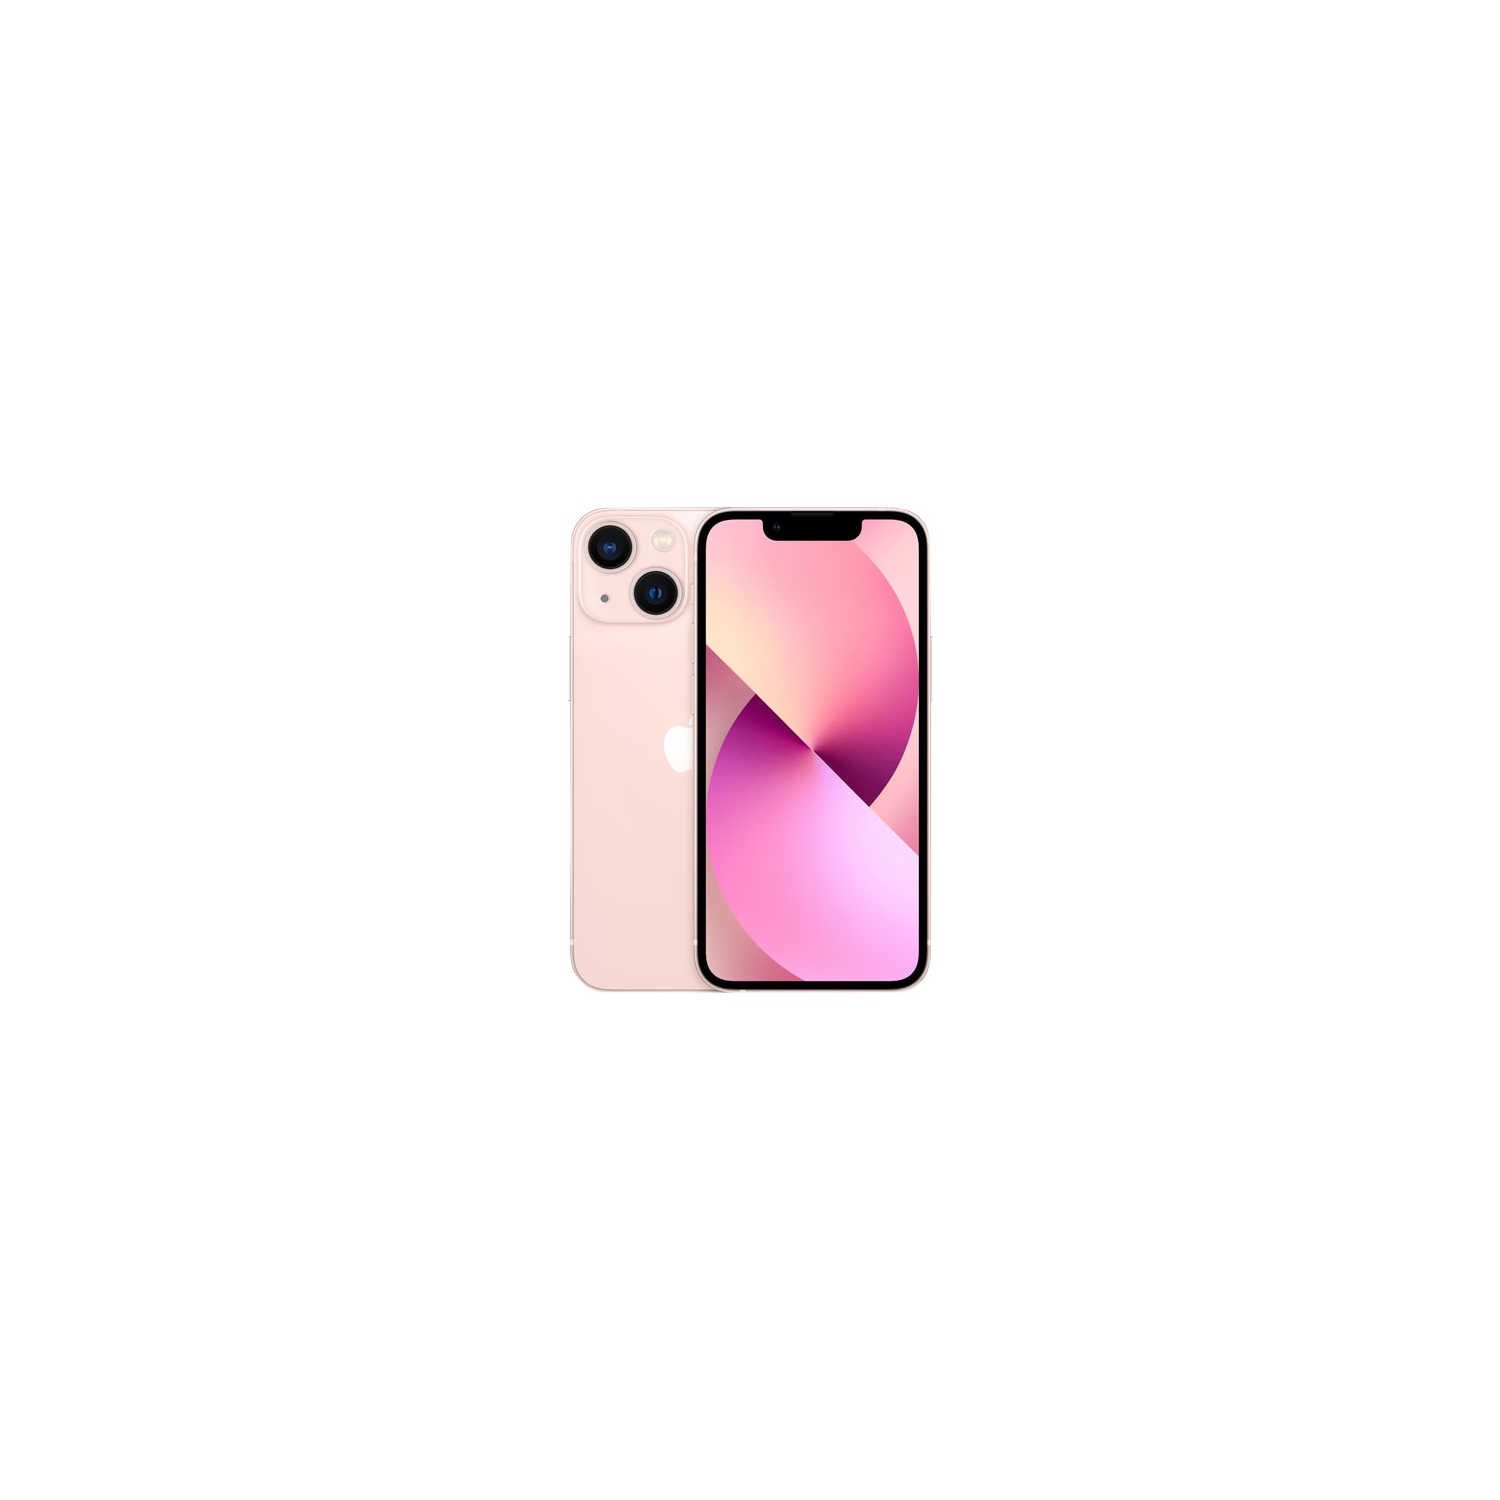 Apple iPhone 13 mini 128GB - Pink - Unlocked - Open Box